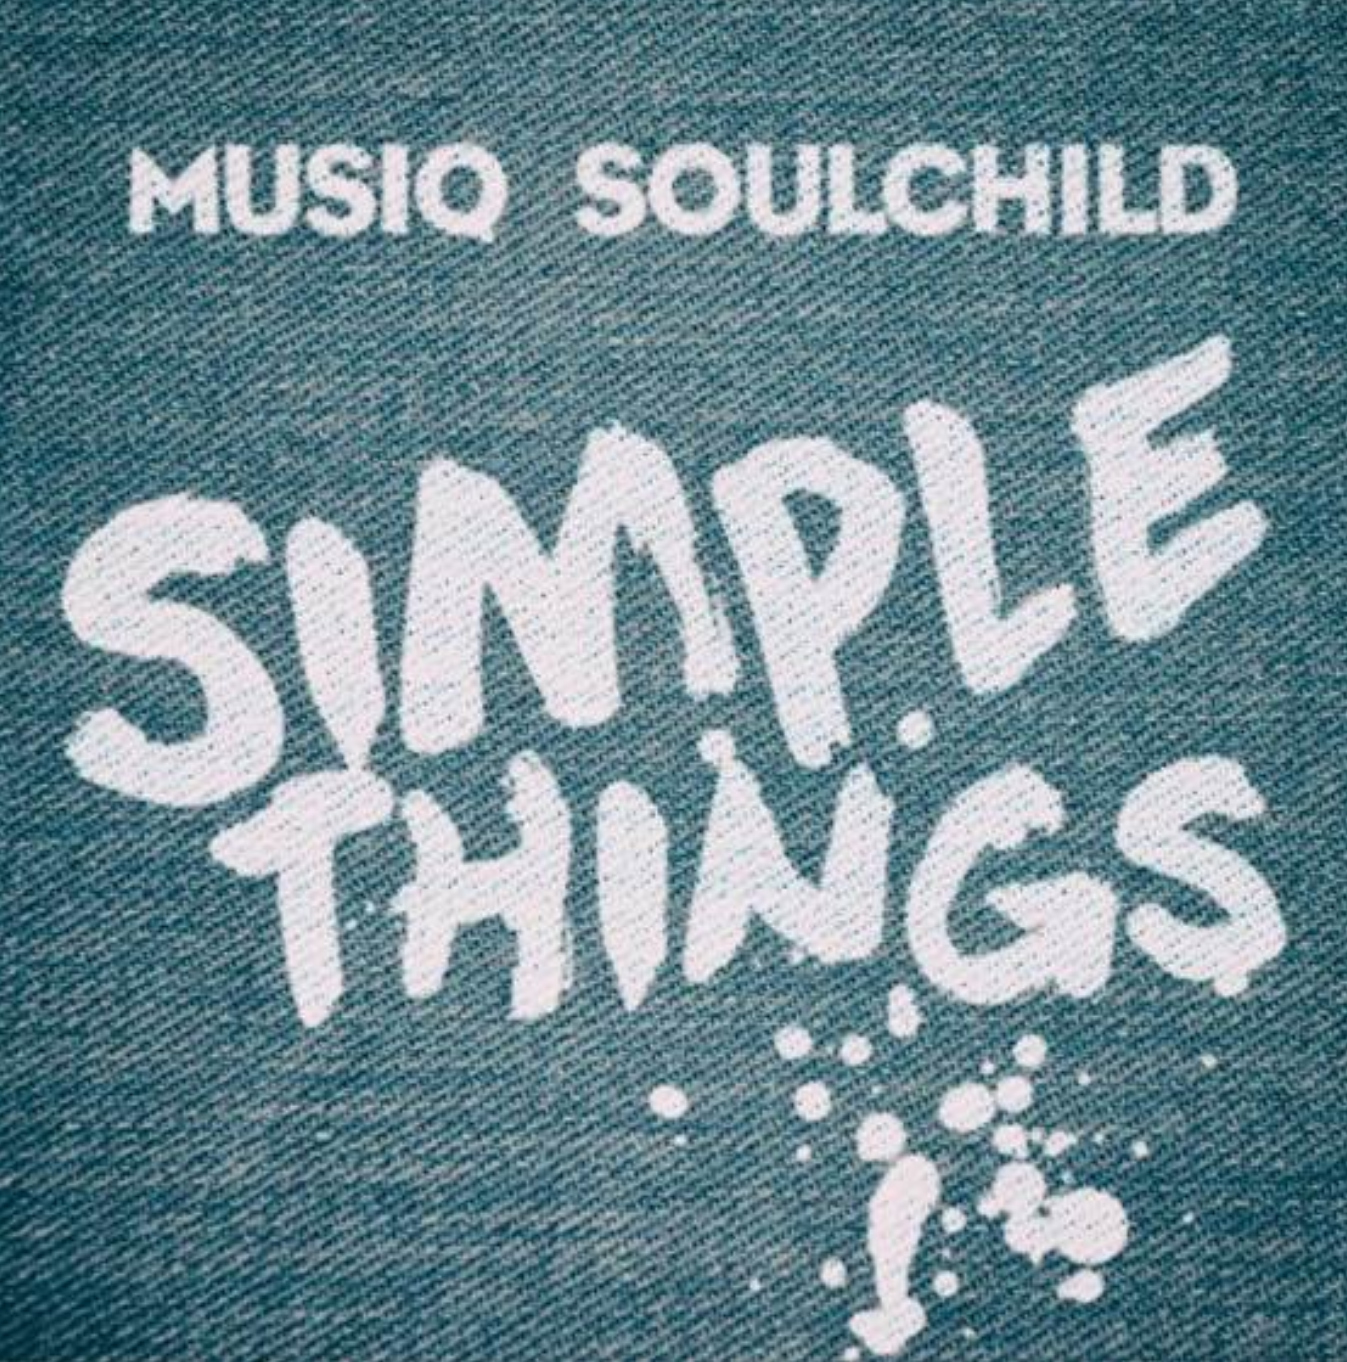 New Music: Musiq Soulchild - Simple Things